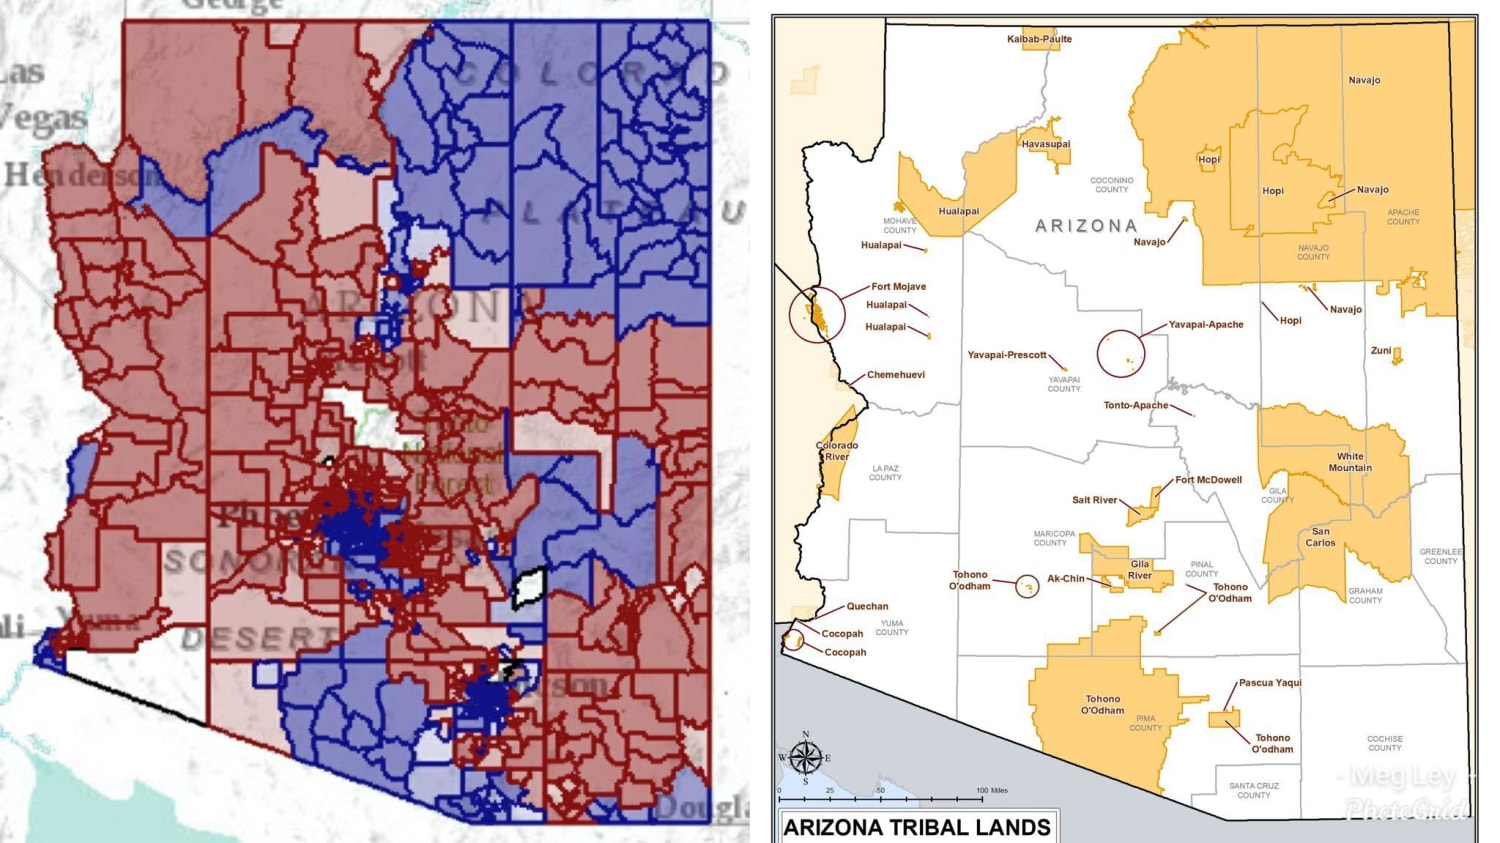 Arizona voting precincts and Arizona Native American reservations.